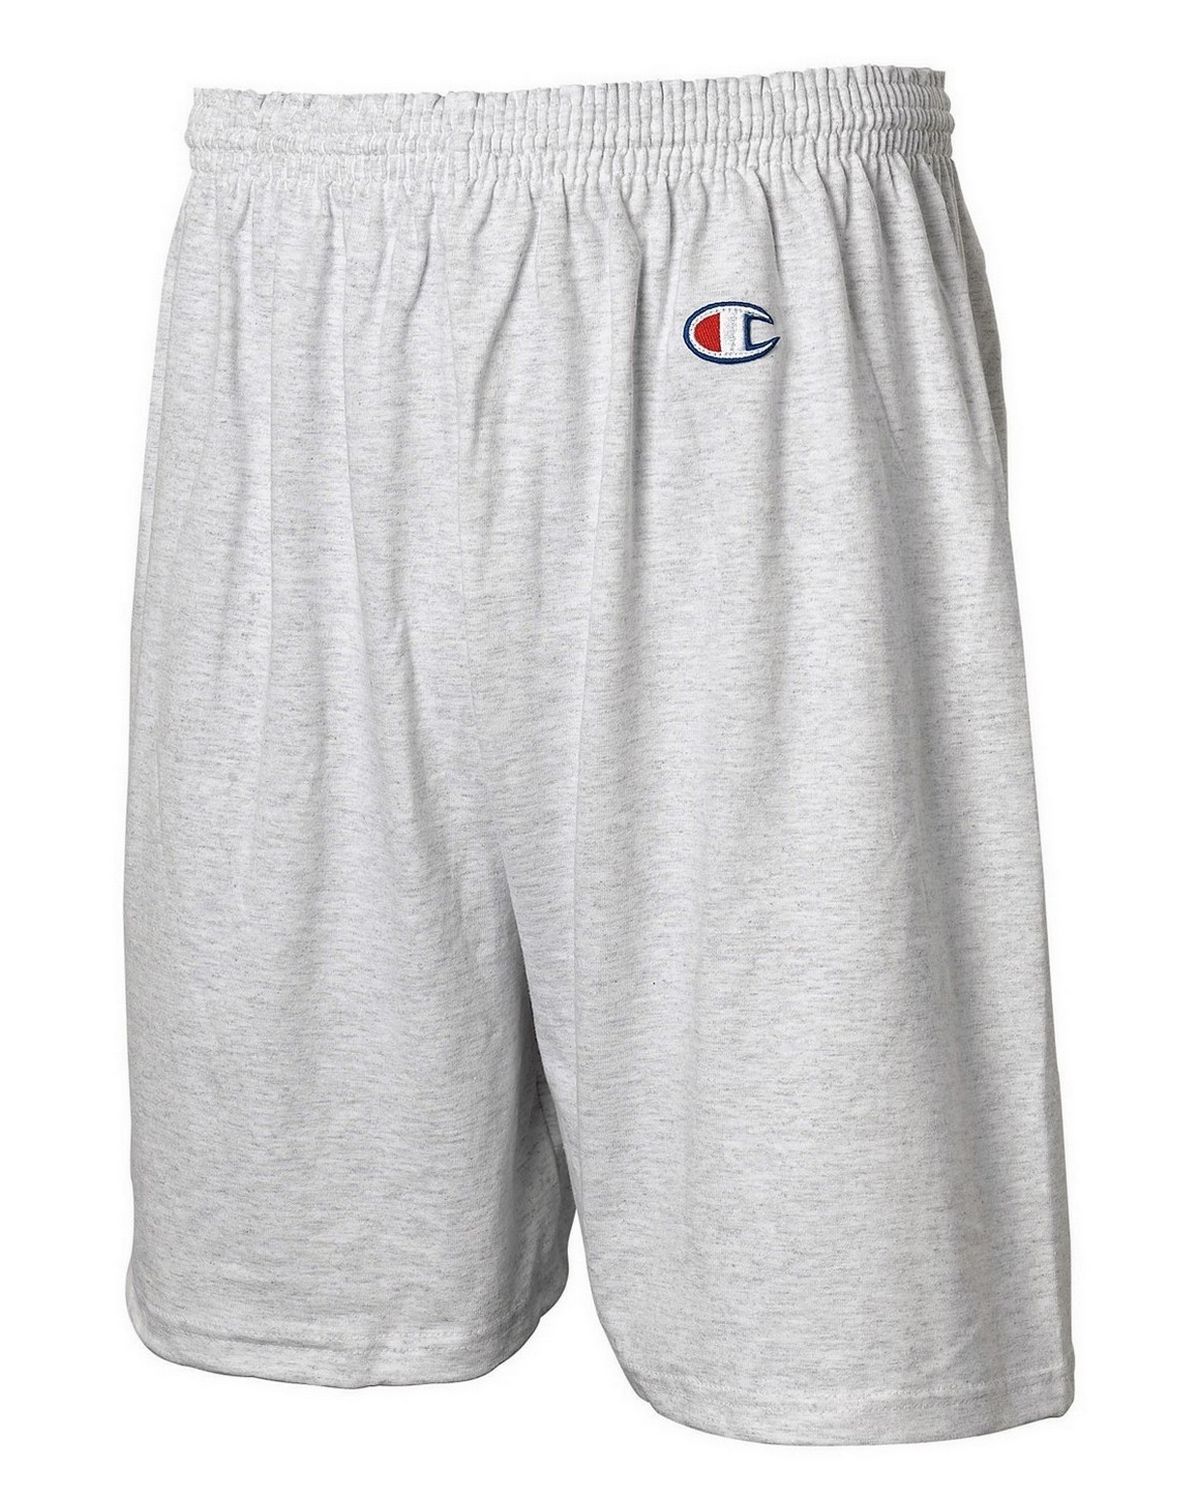 2X 3XL Athletic Cotton Gym Shorts 6" Inseam No Pocket C-8187 Champion Mens S-XL 